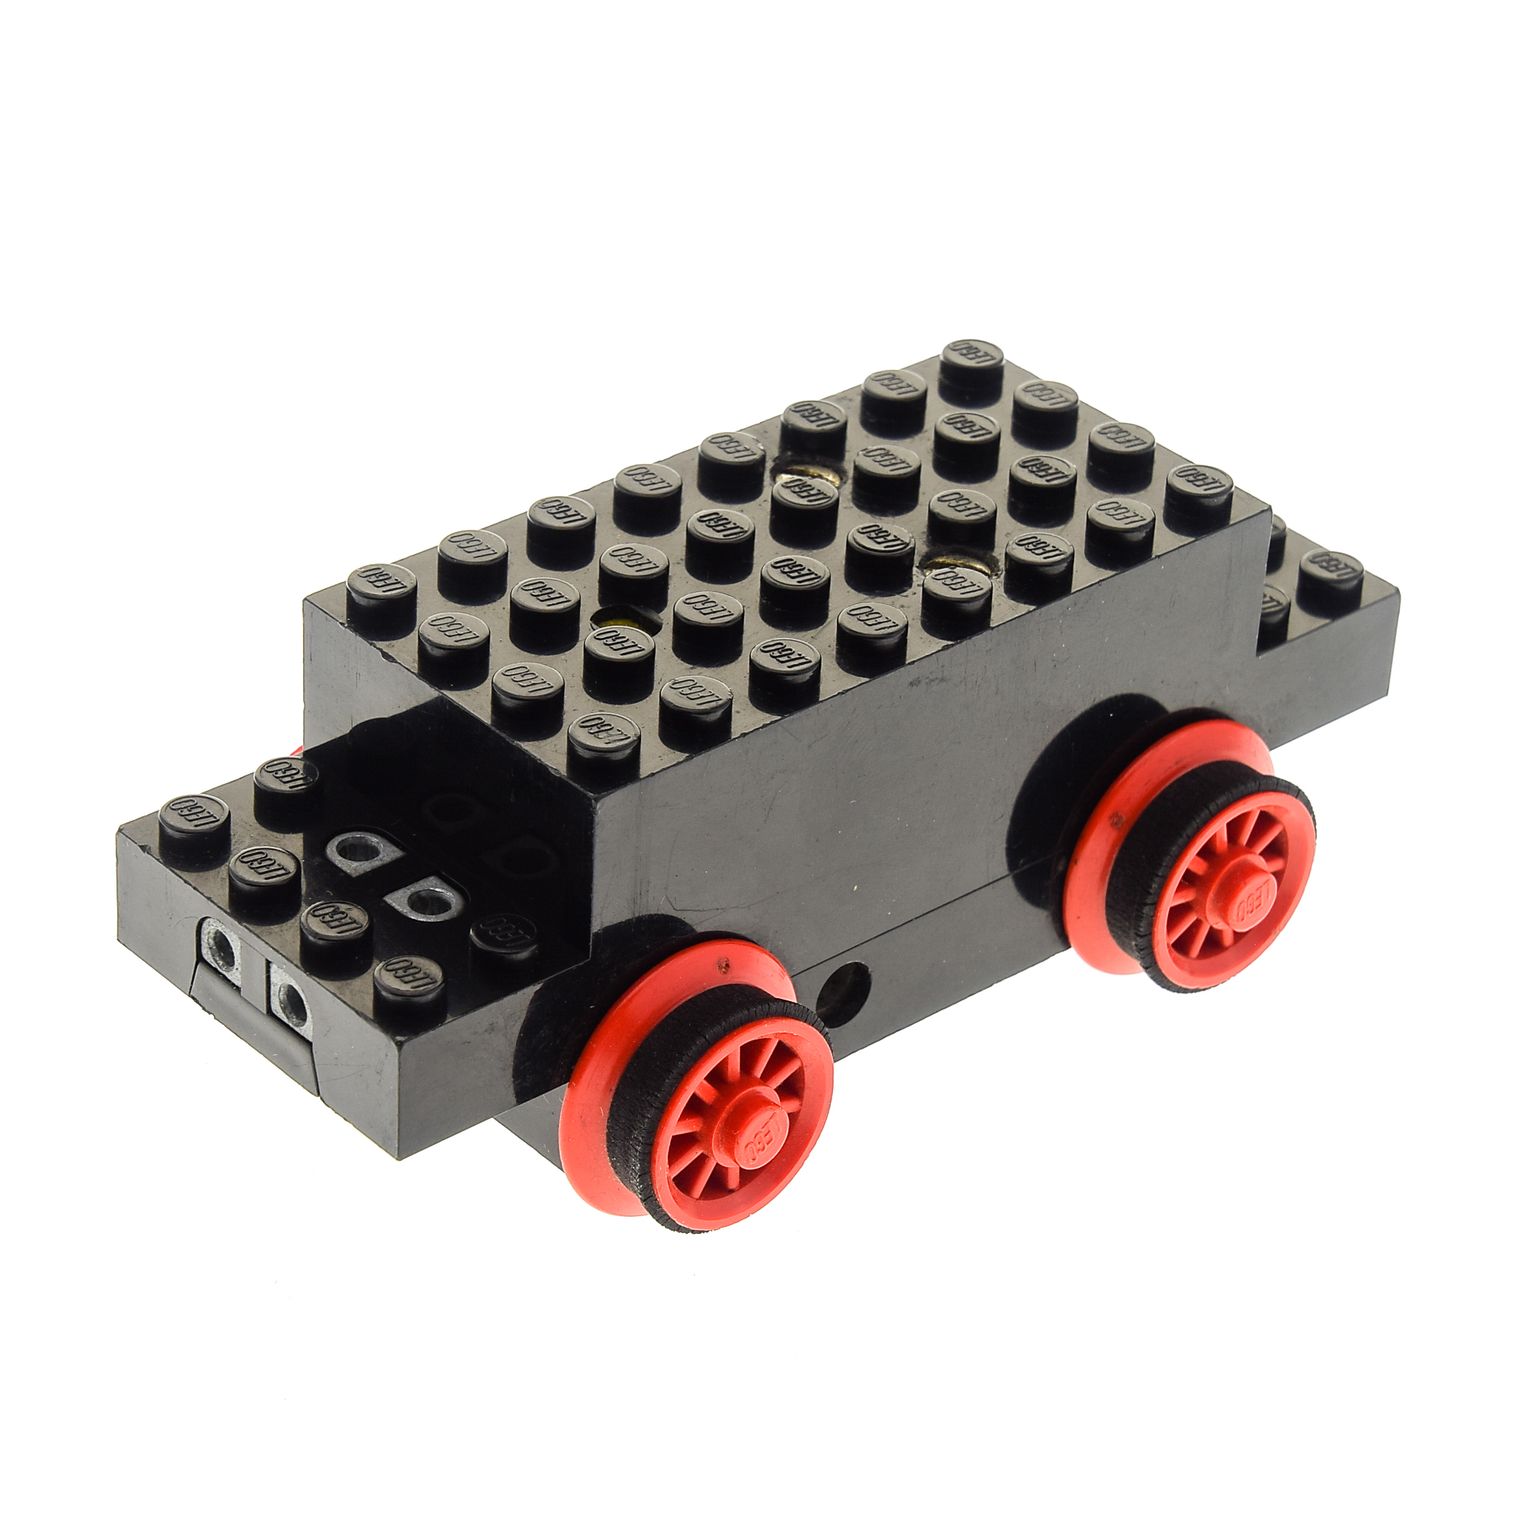 LEGO Eisenbahn 4,5V Motor Zubehör geprüft gebraucht 